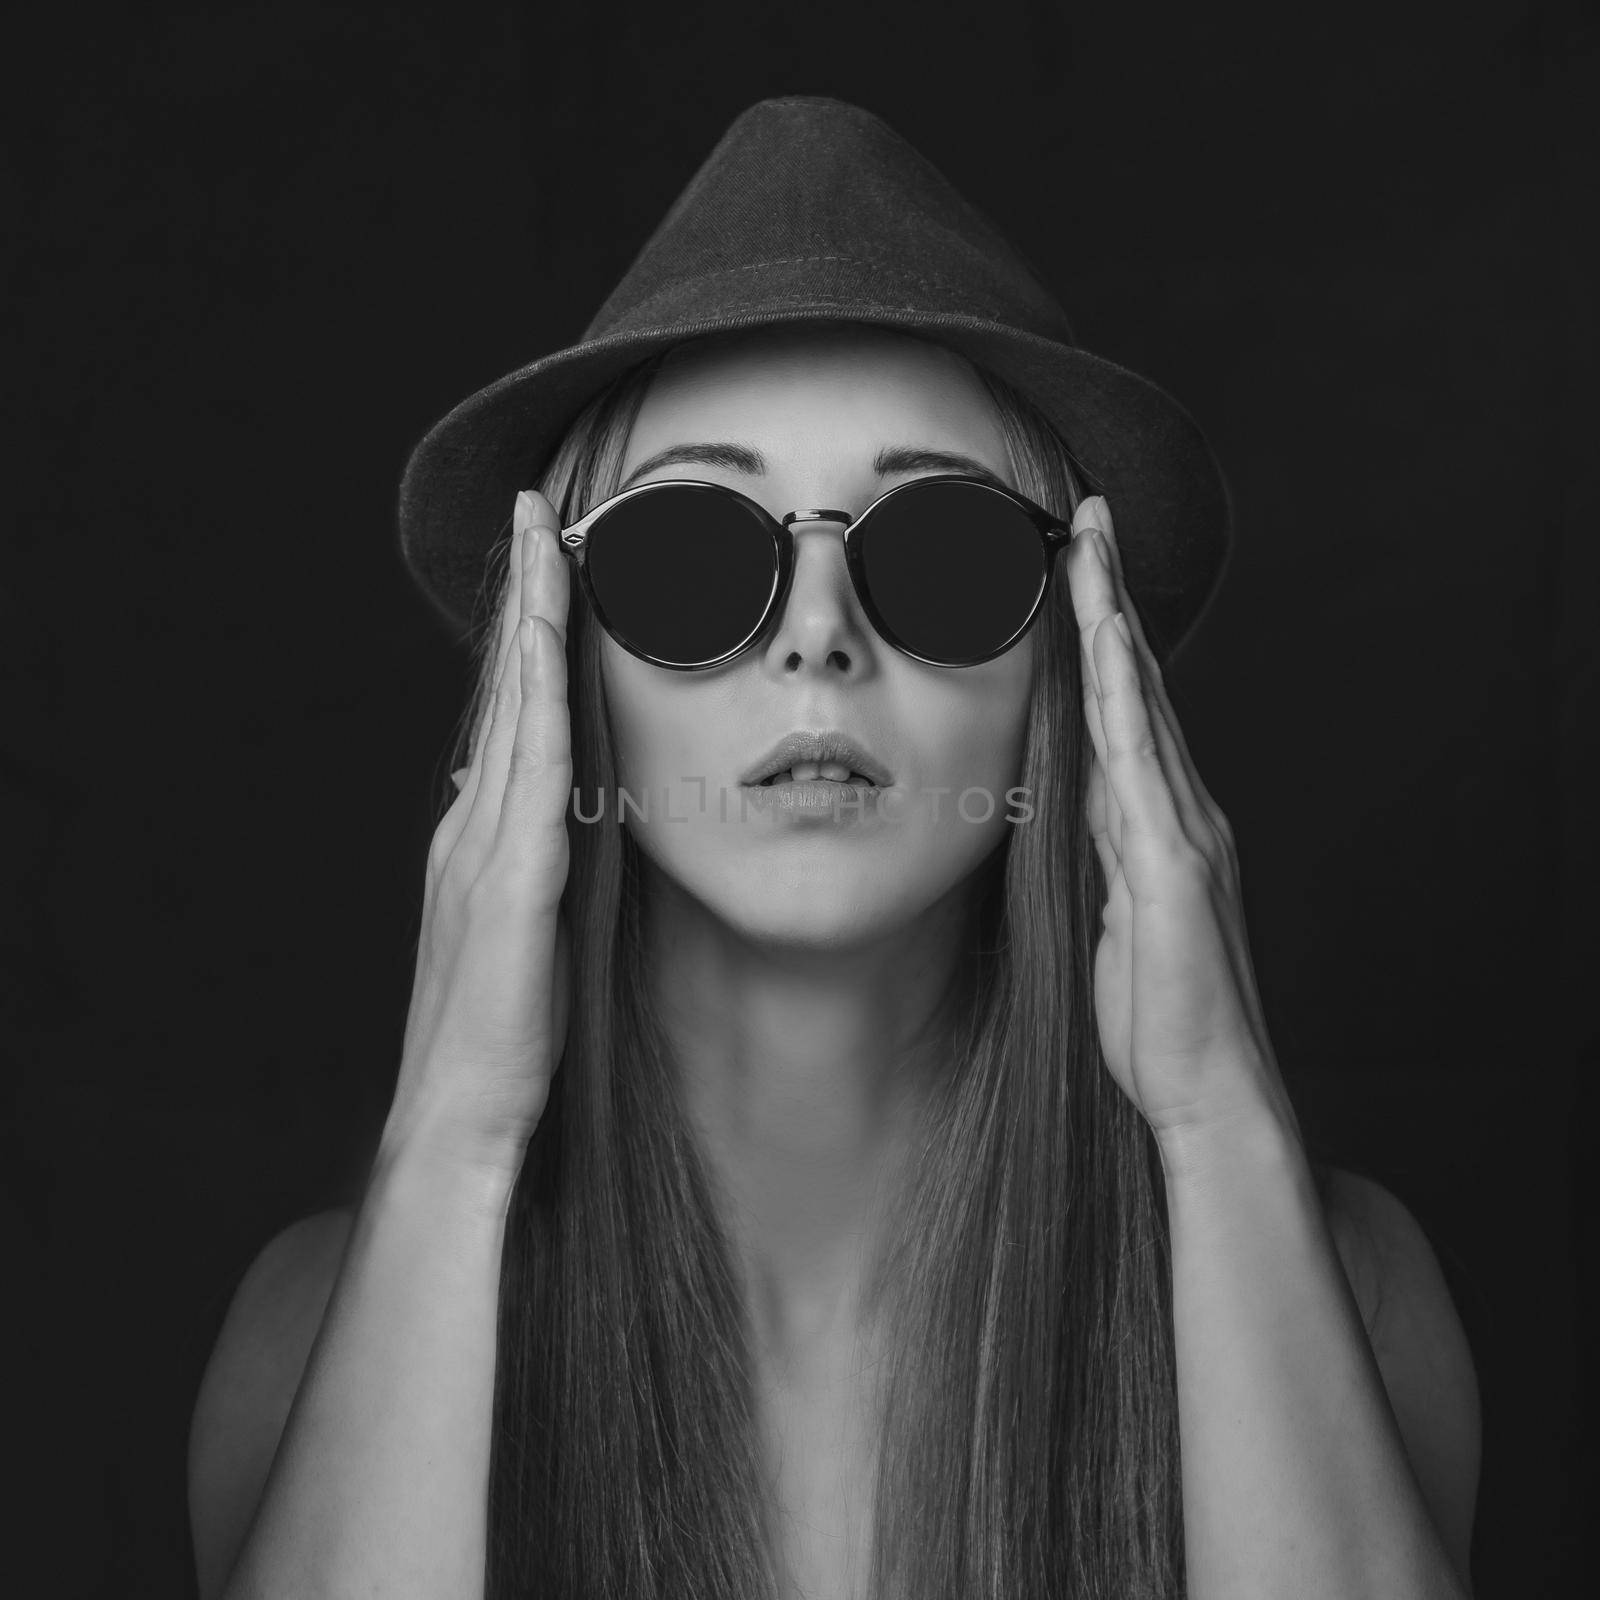 Beautiful girl in round sunglasses by alexAleksei